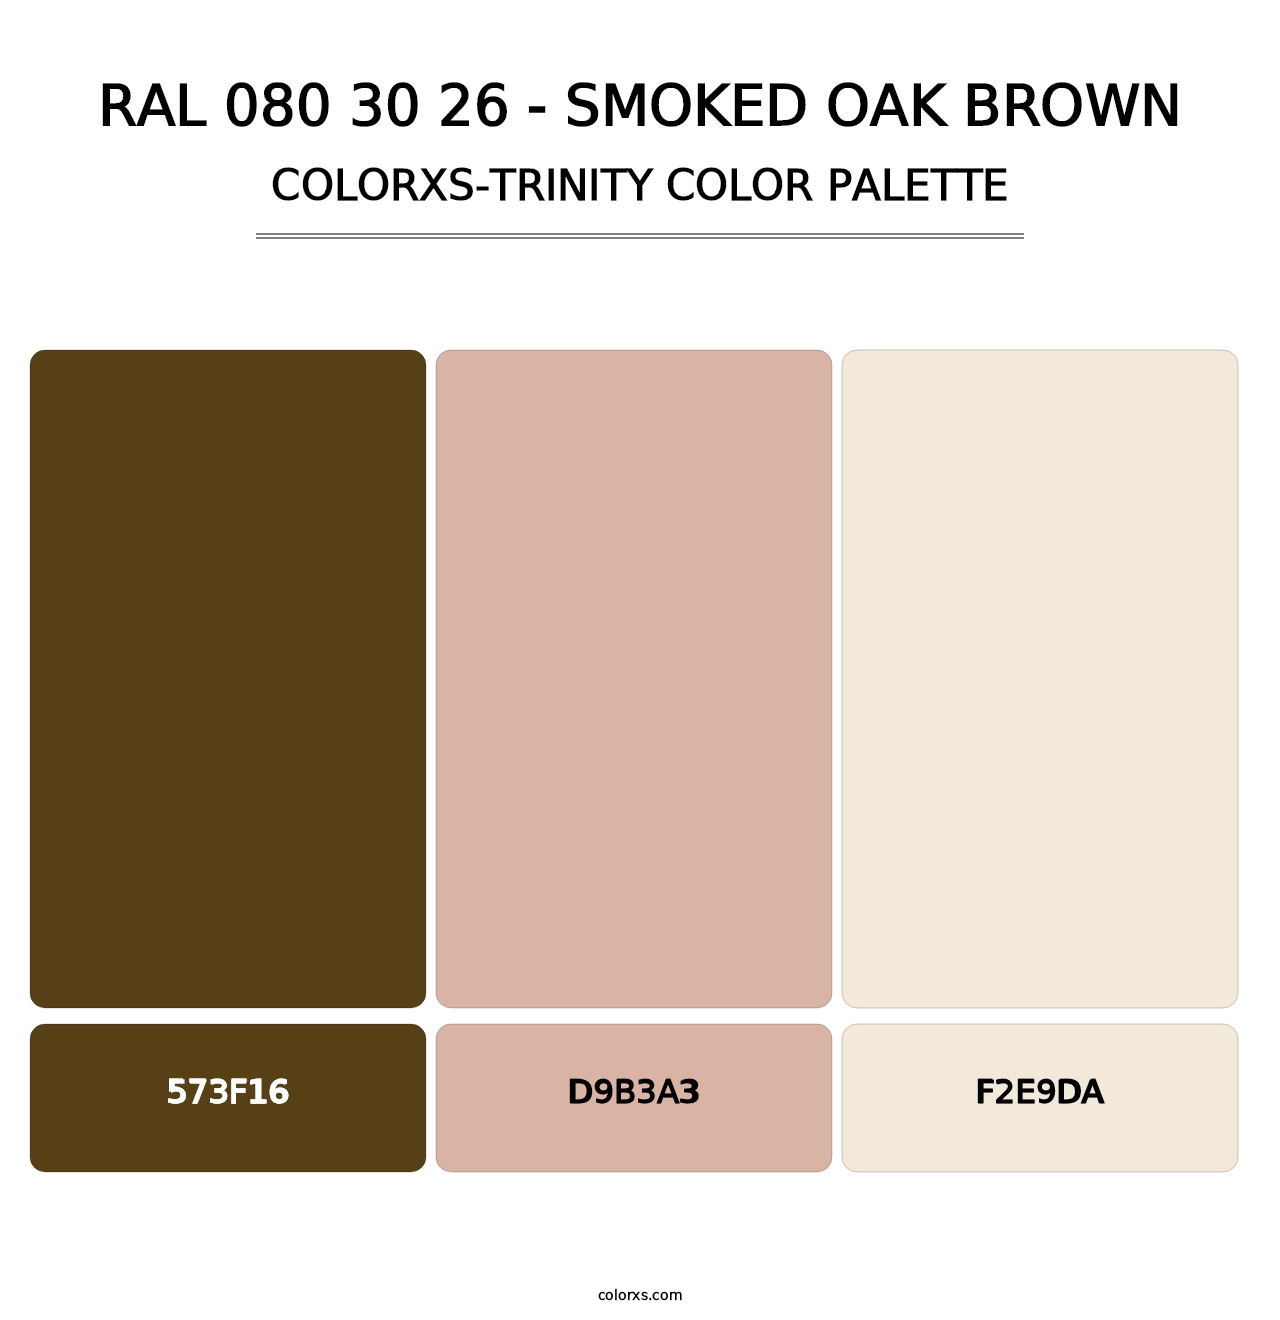 RAL 080 30 26 - Smoked Oak Brown - Colorxs Trinity Palette